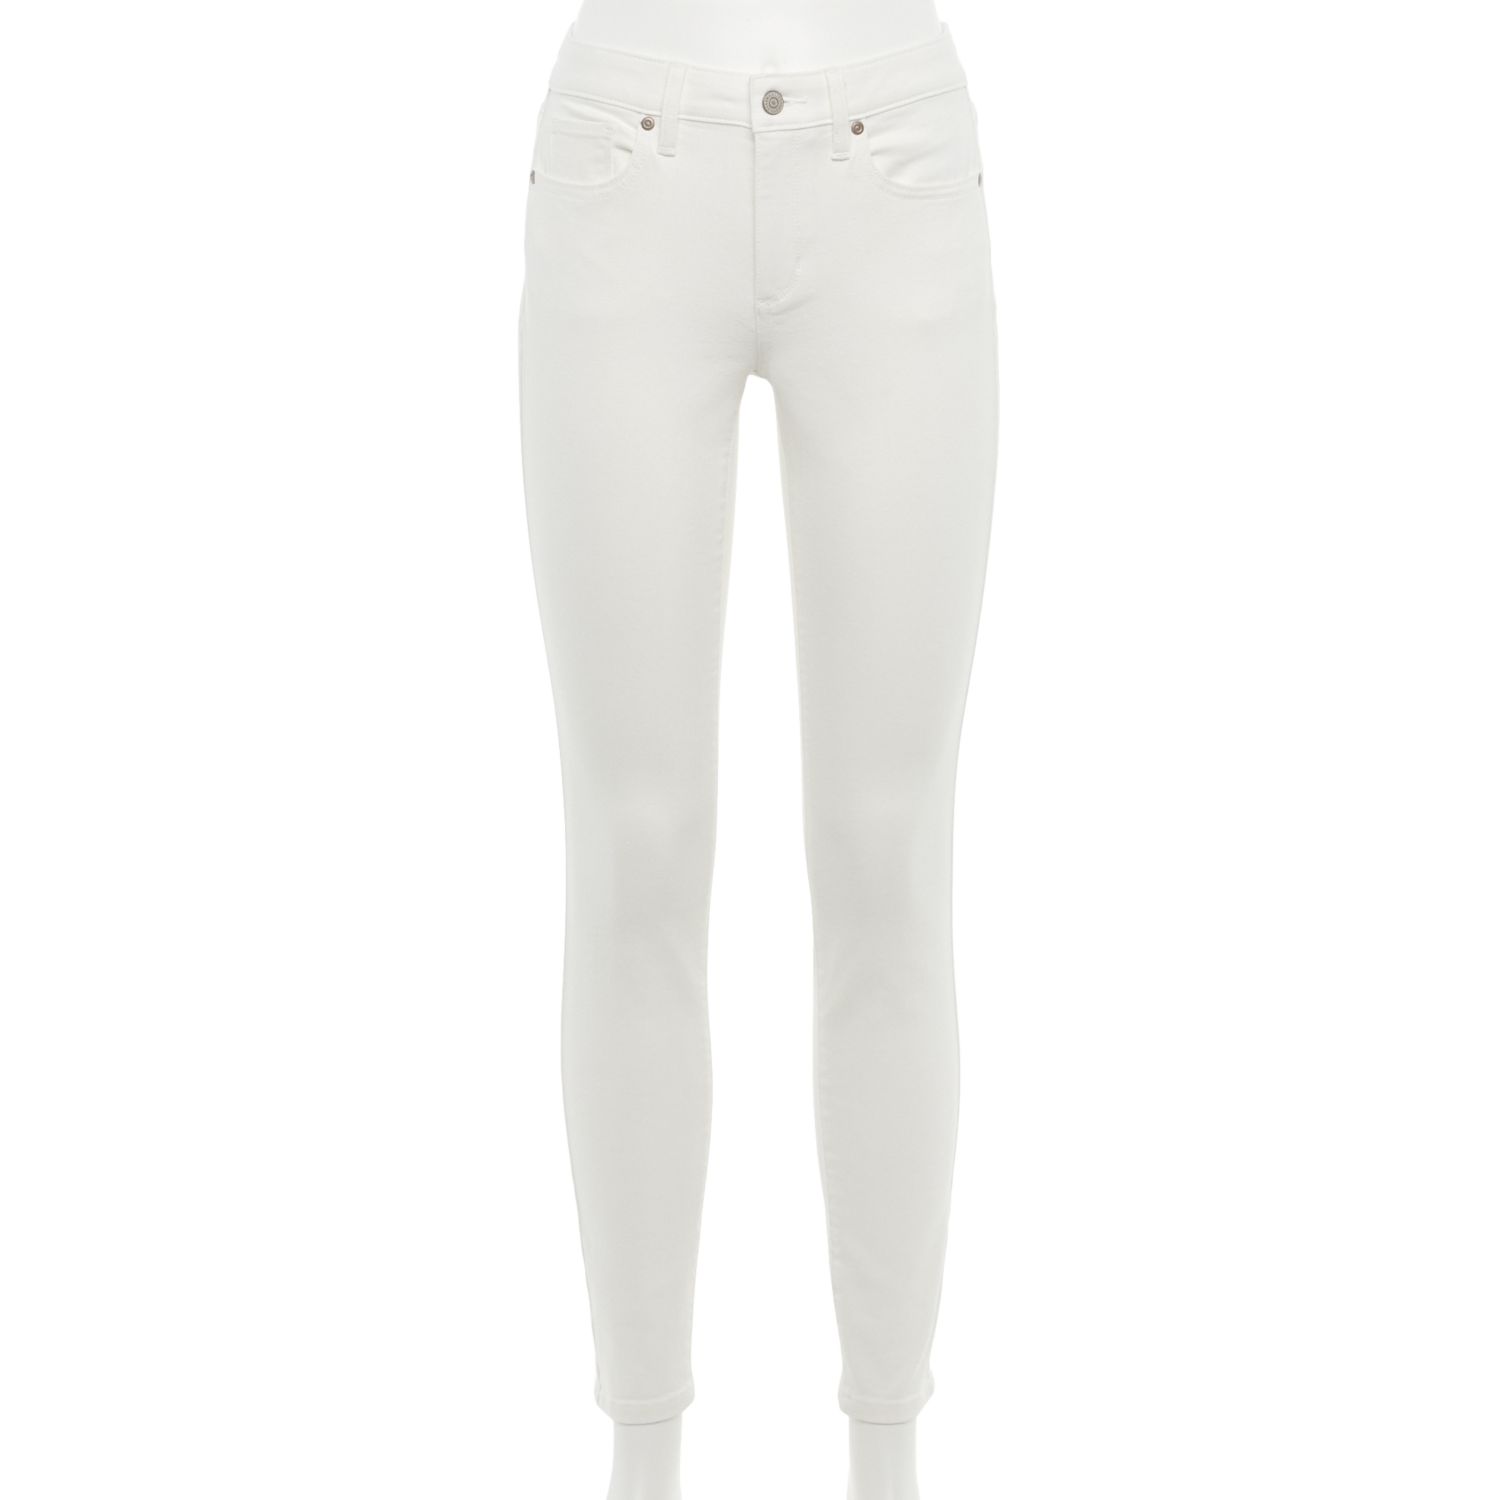 denim jeans white